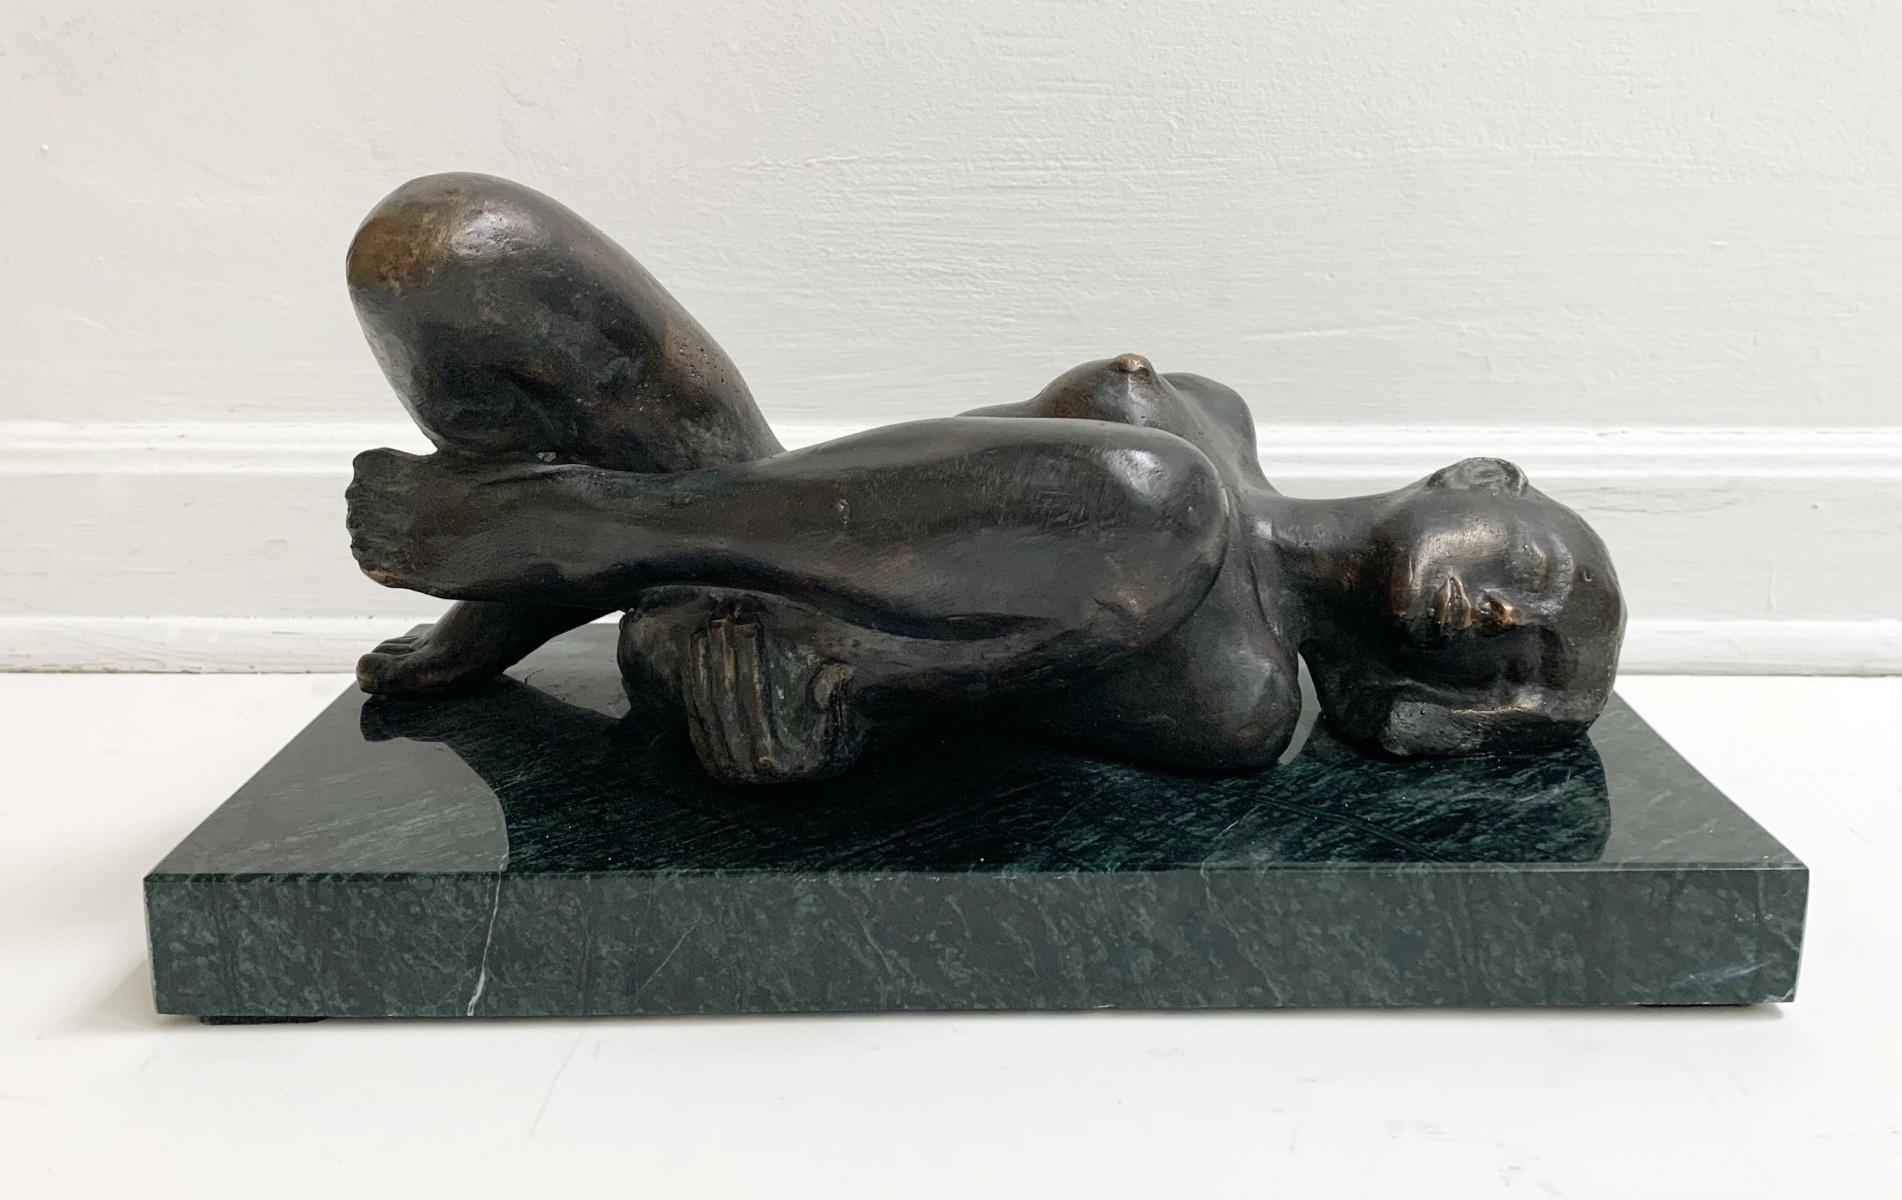 Woman - XXI century Contemporary figurative bronze sculpture, Classical, Realism - Sculpture by Ryszard Piotrowski